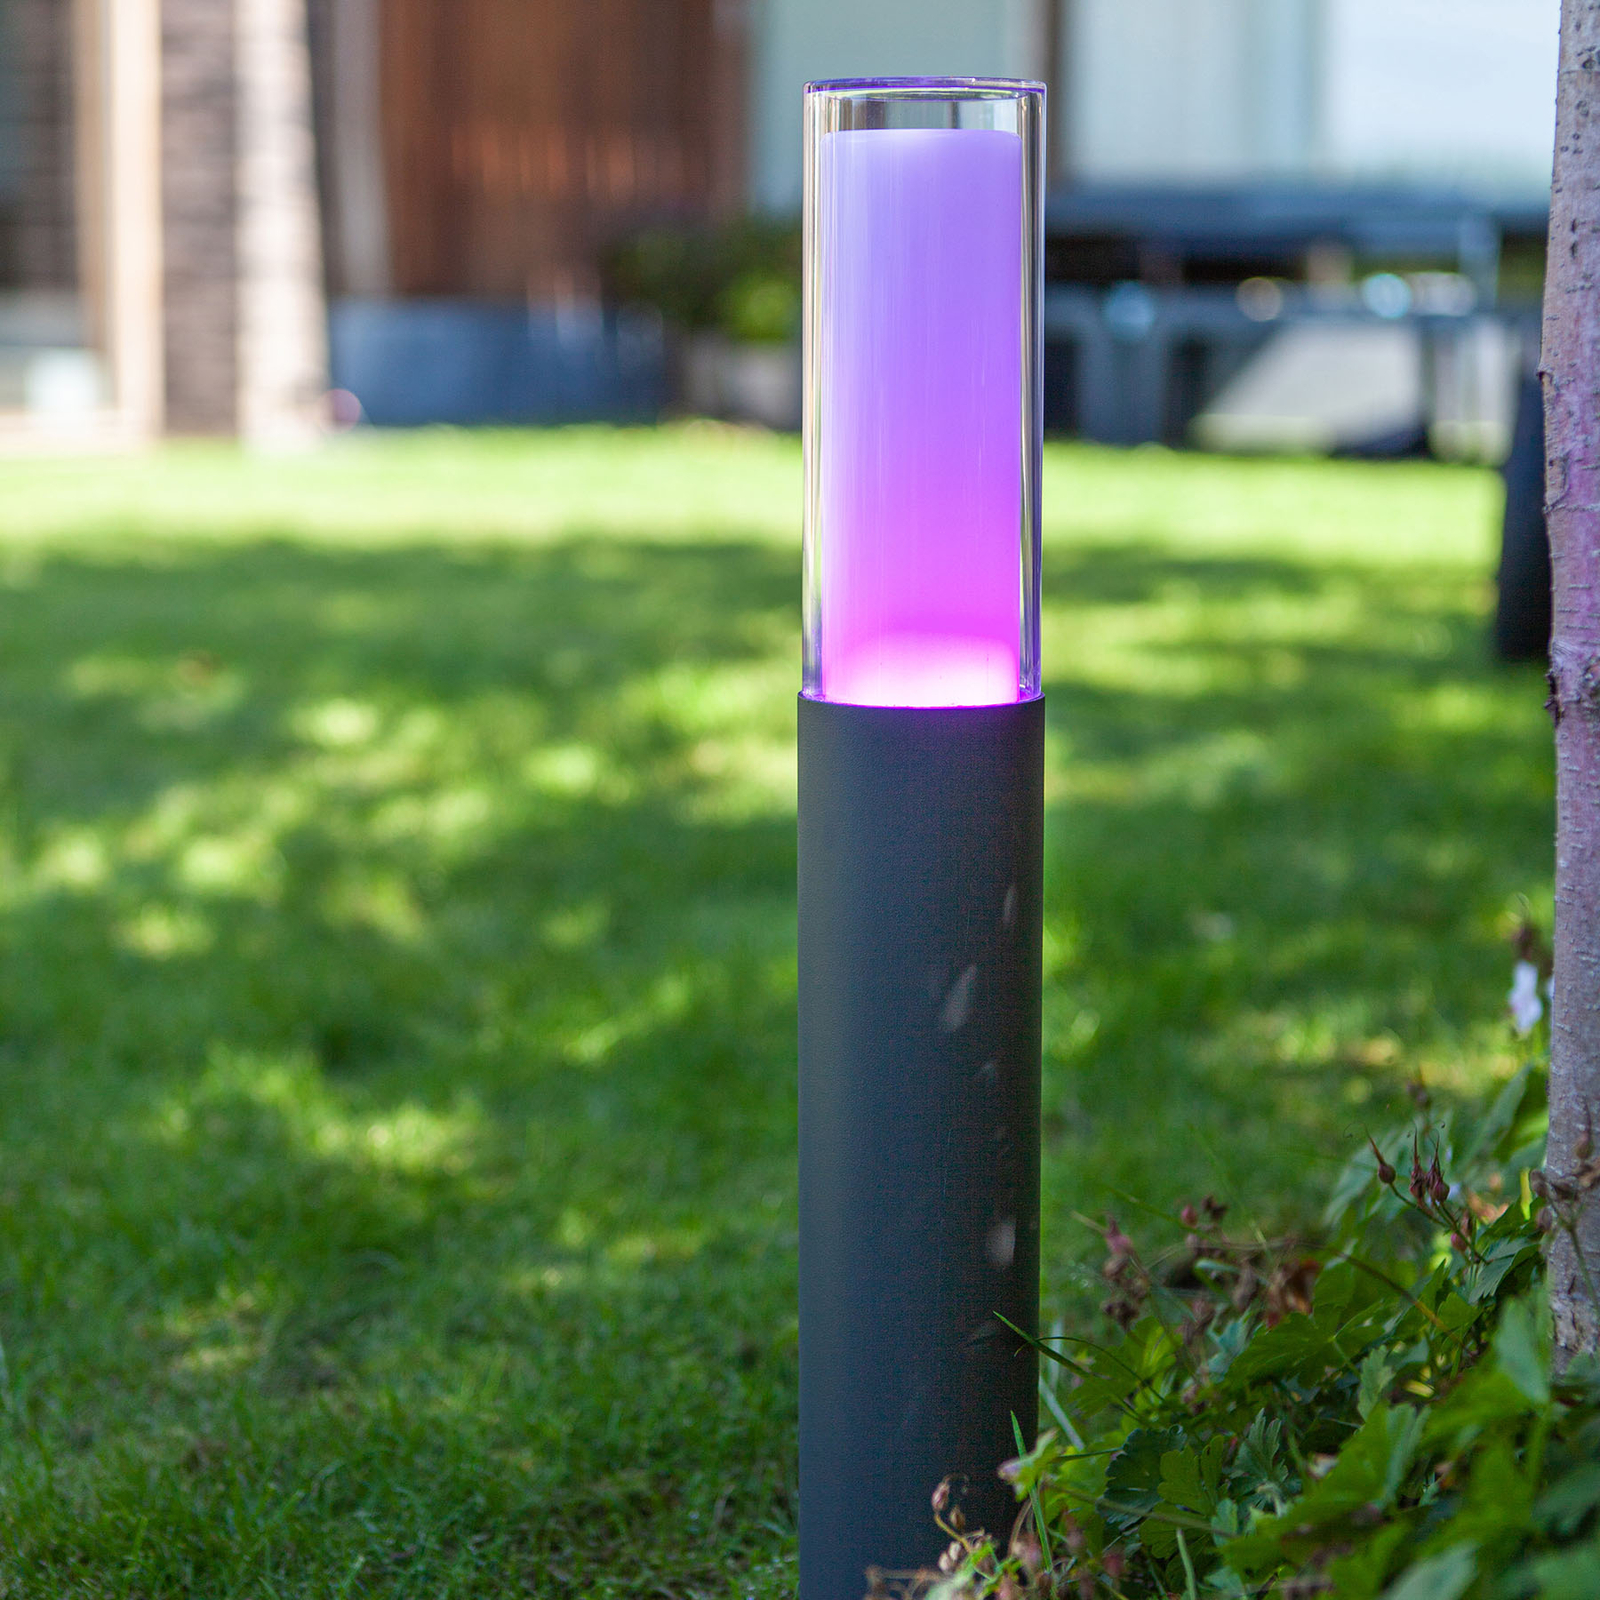 LED pedestal light Dropa, RGBW smart controllable